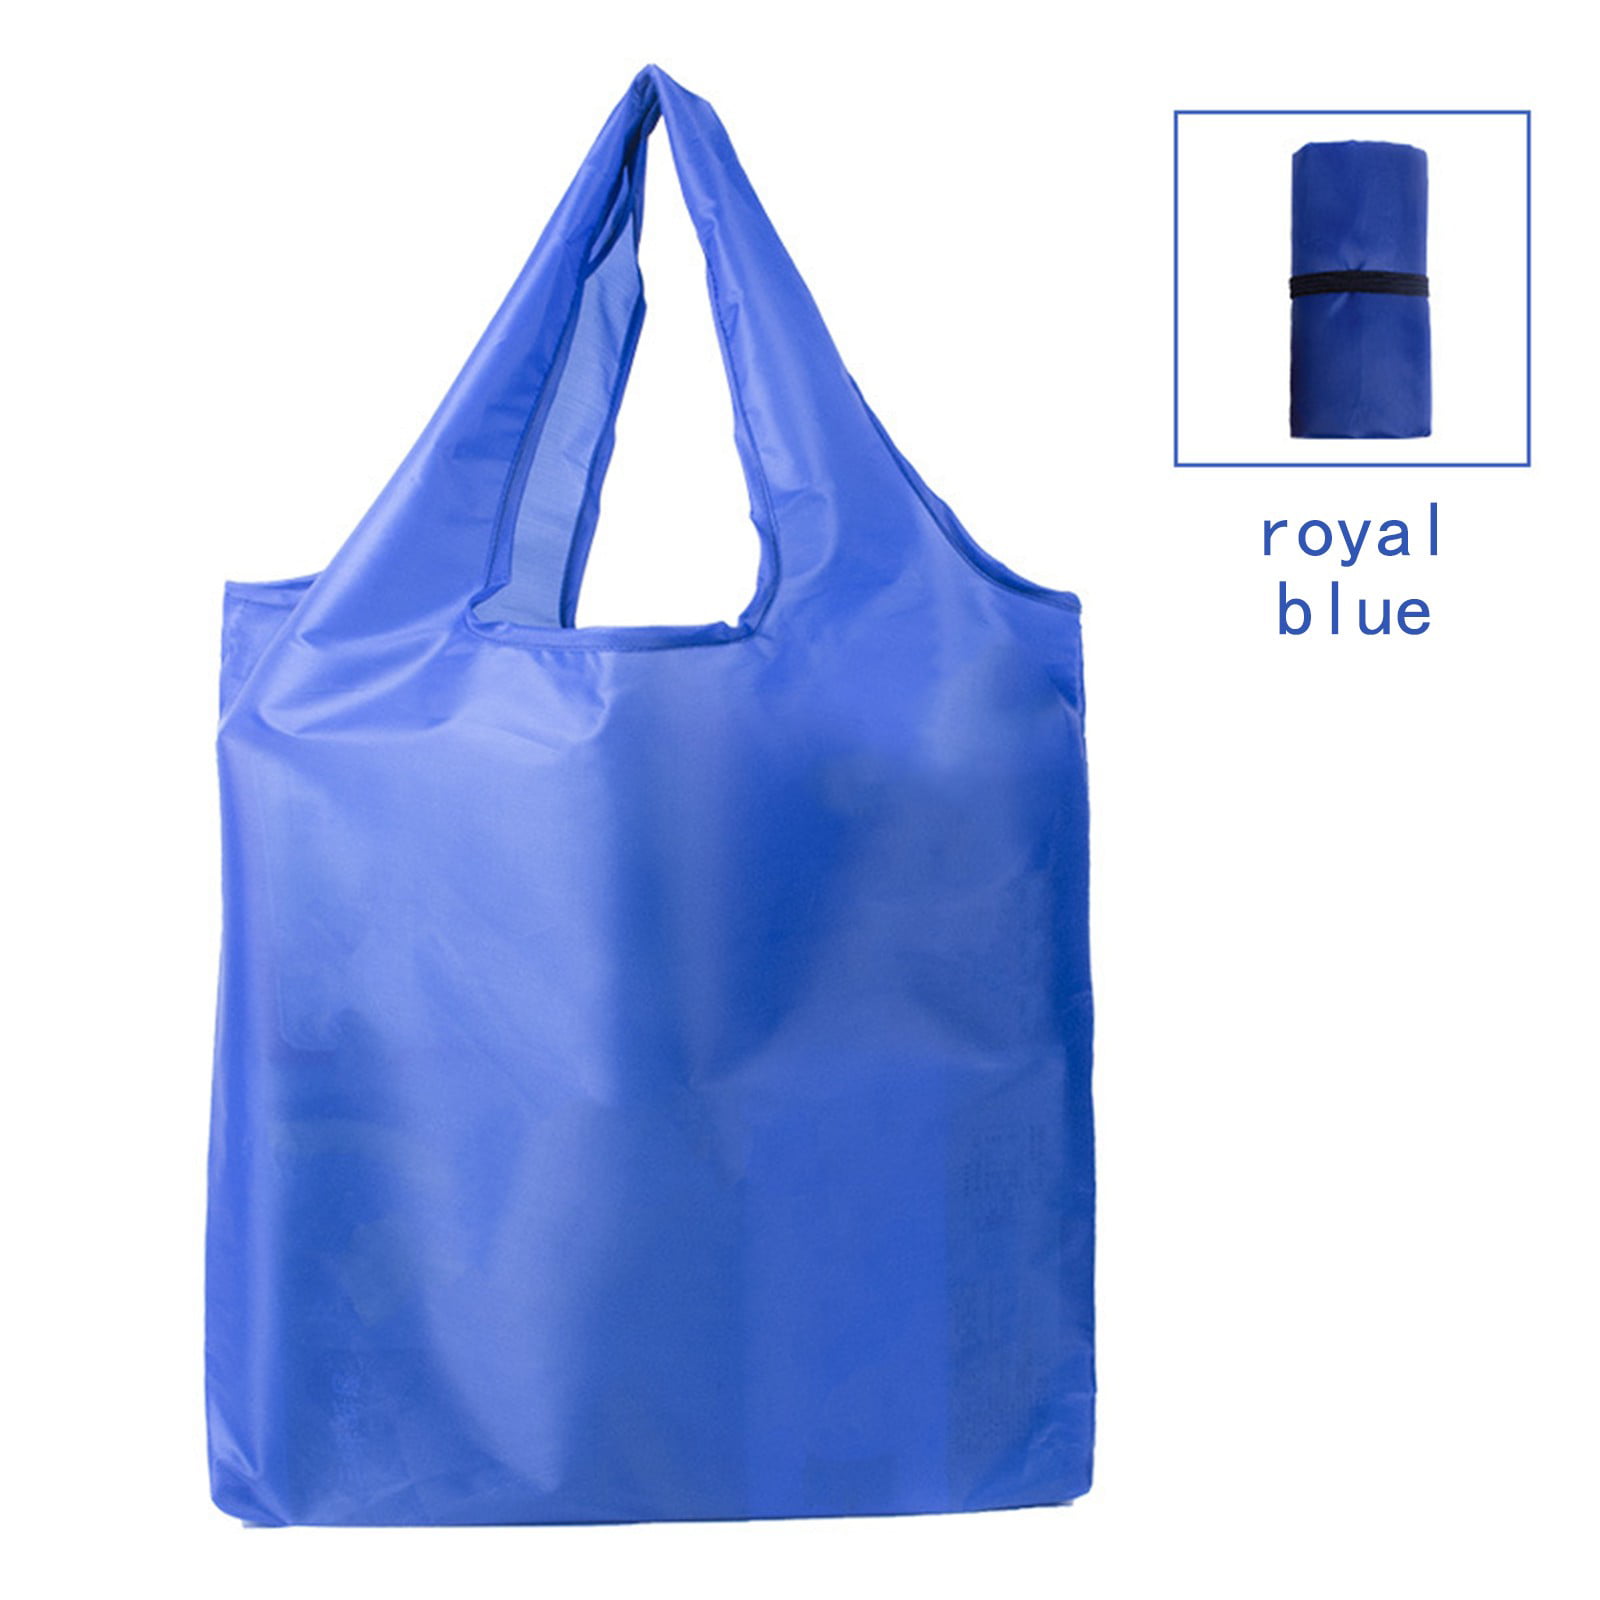 Details about   Reusable Bag Nylon Tote Storage Shopping Bag Folding Waterproof Grocery Handbag 